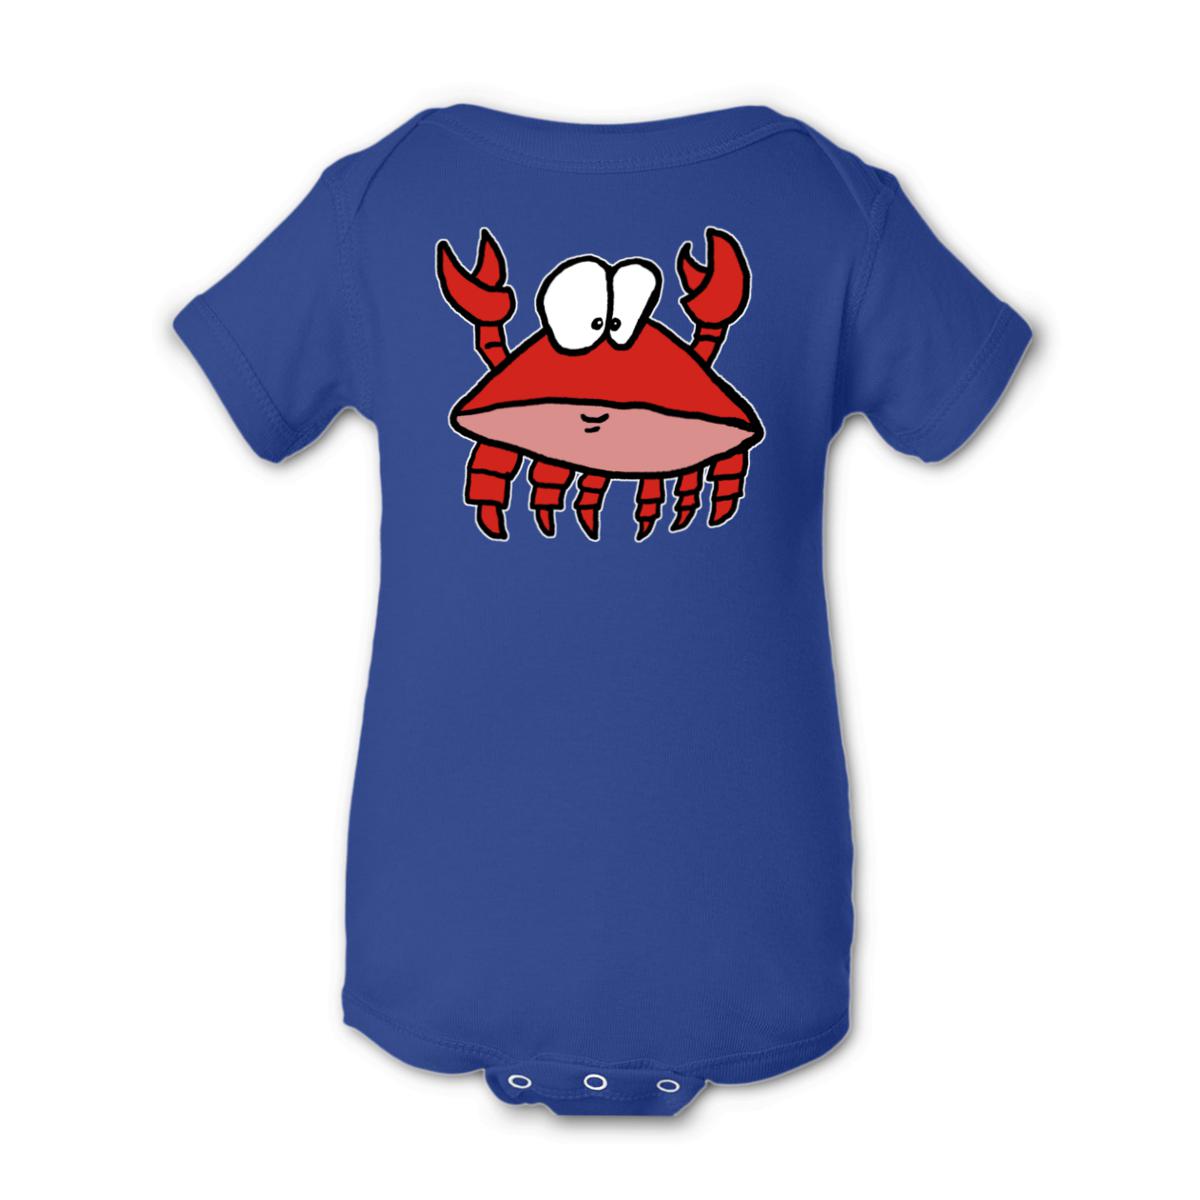 Crab 2.0 Onesie 18M royal-blue